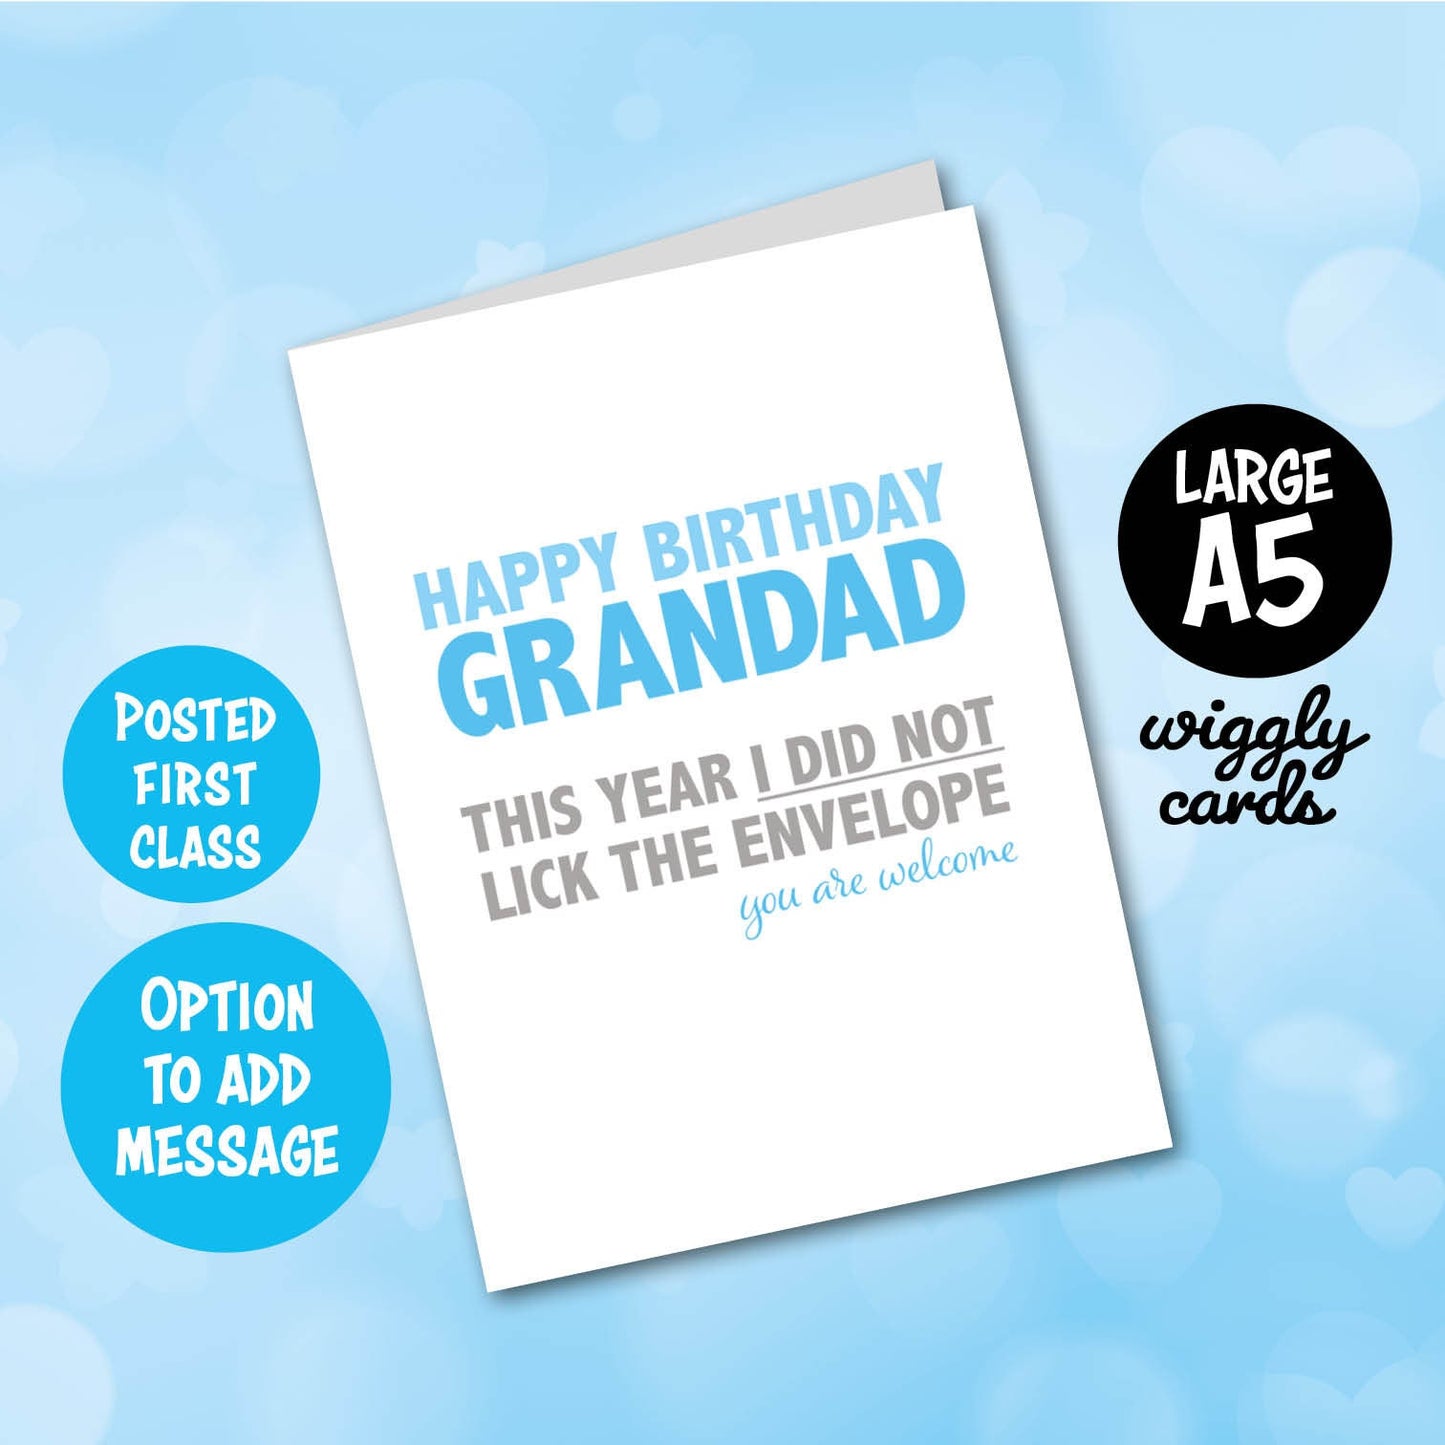 Grandad I did not lick the envelope birthday card